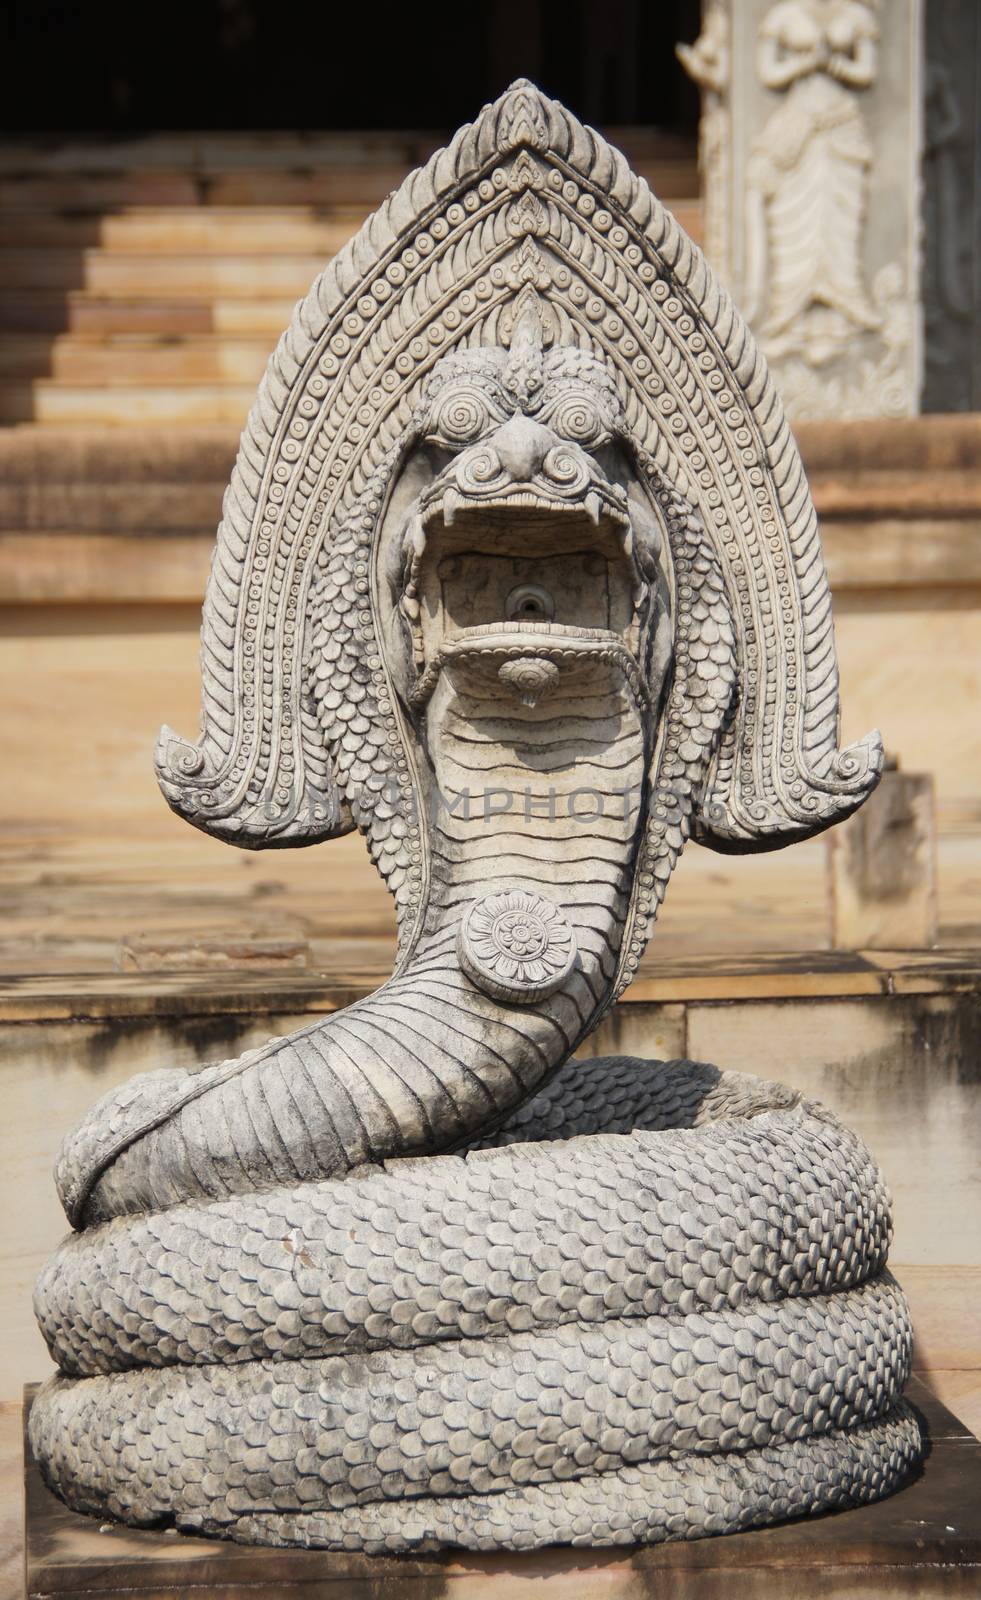 Stone sculpture art anaconda remains a national public Thailand.